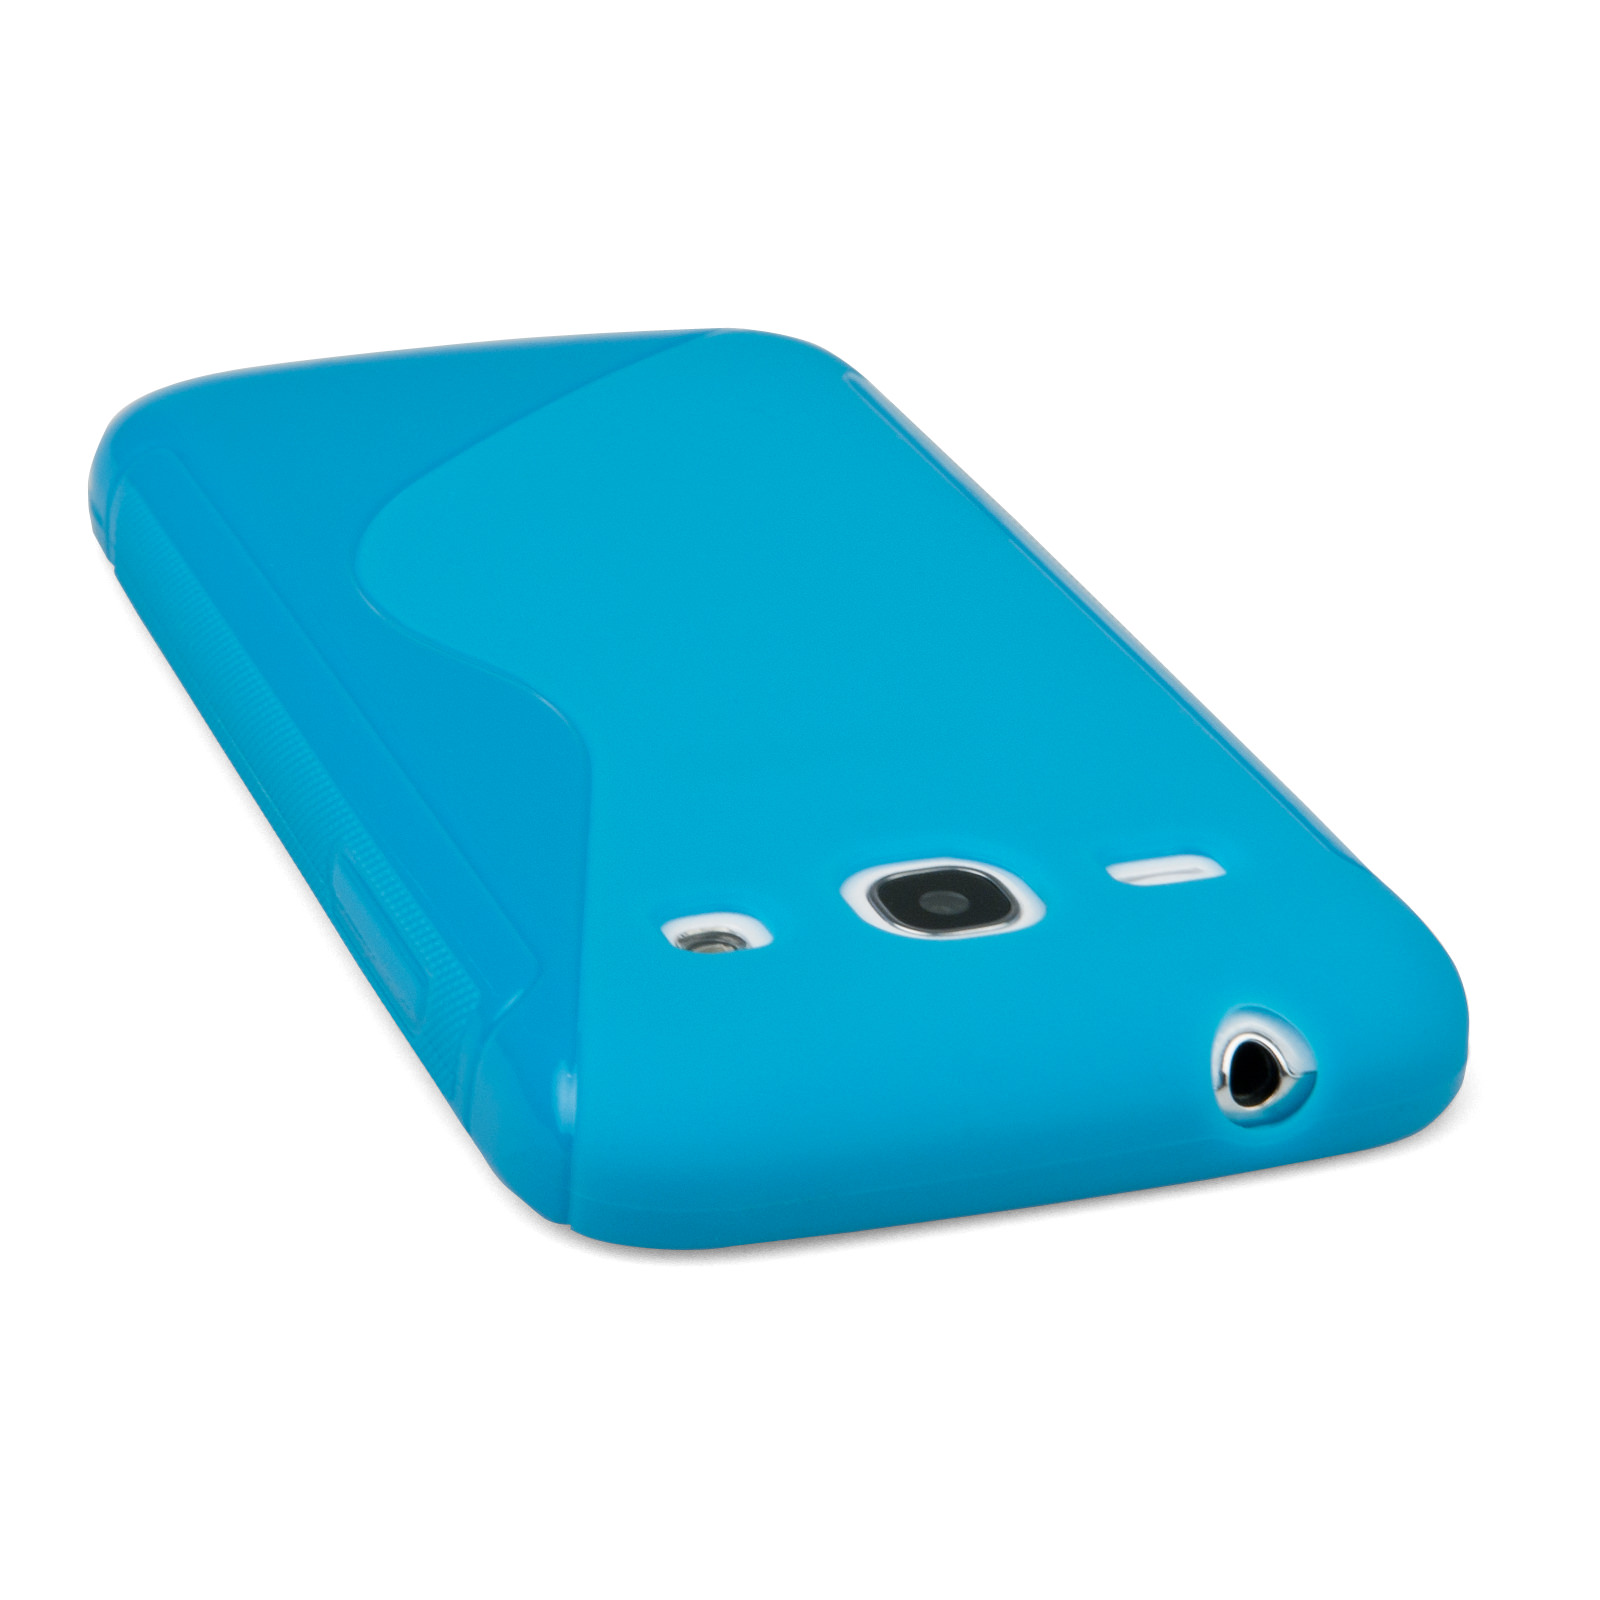 Caseflex Samsung Galaxy Core Plus Silicone Gel S-Line Case - Blue